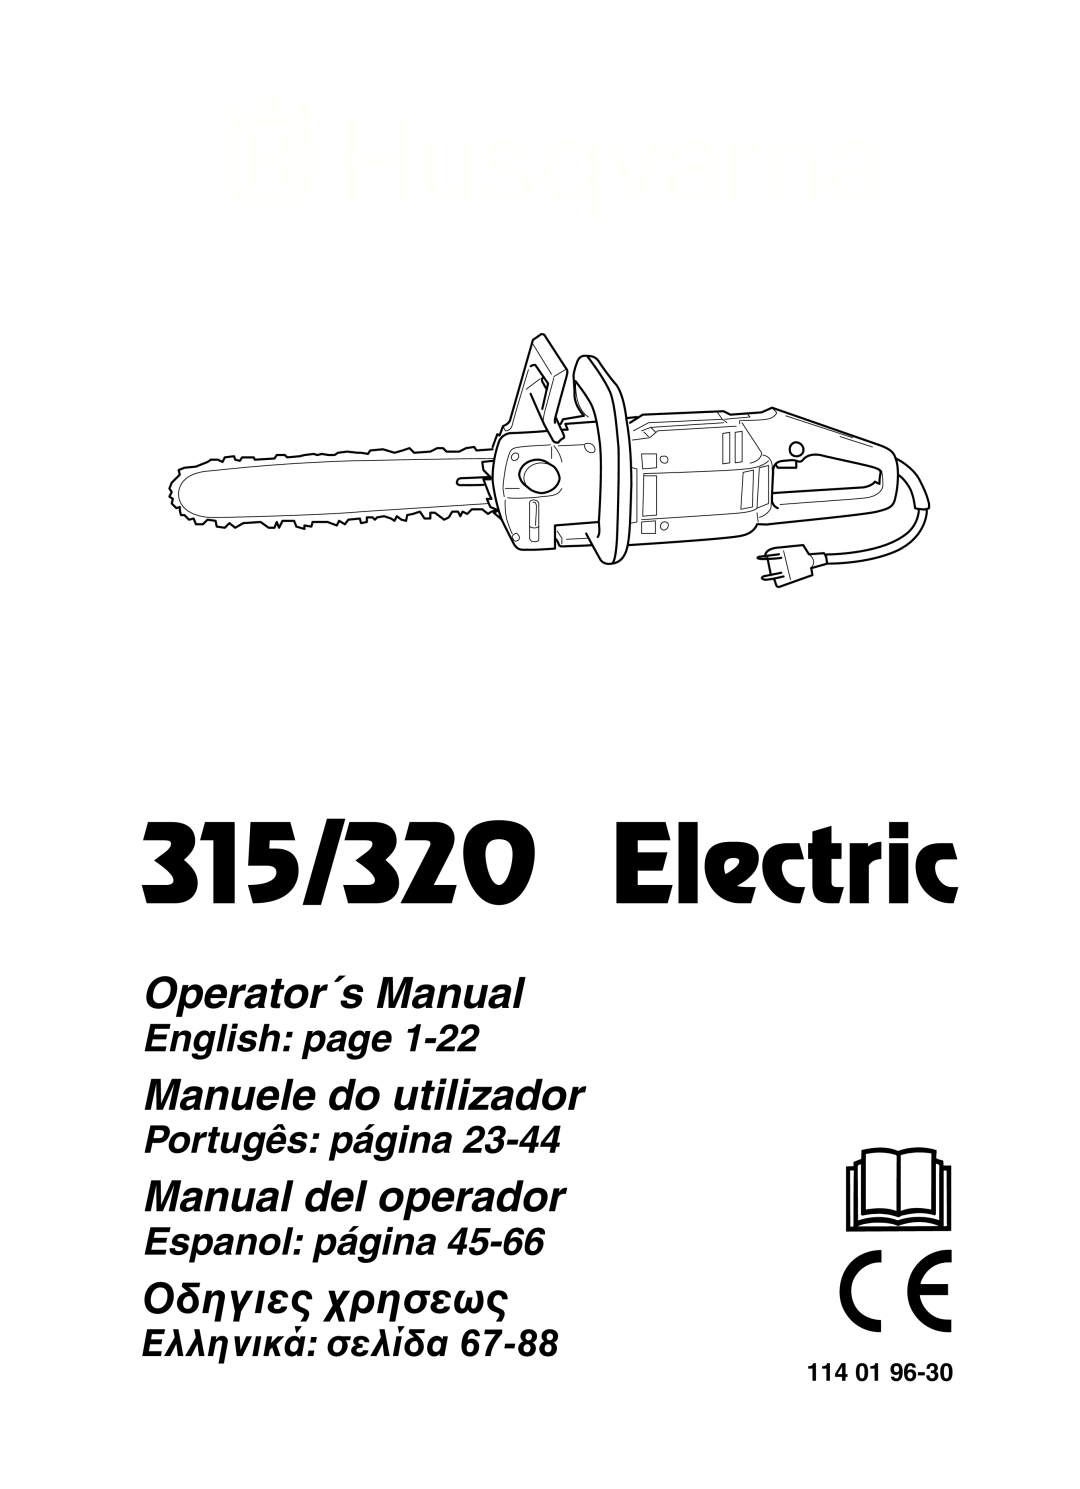 Husqvarna 315, 320 manual 114 01, 315/320 Electric, Operator´s Manual, Manuele do utilizador, Manual del operador, Oδηγιες 